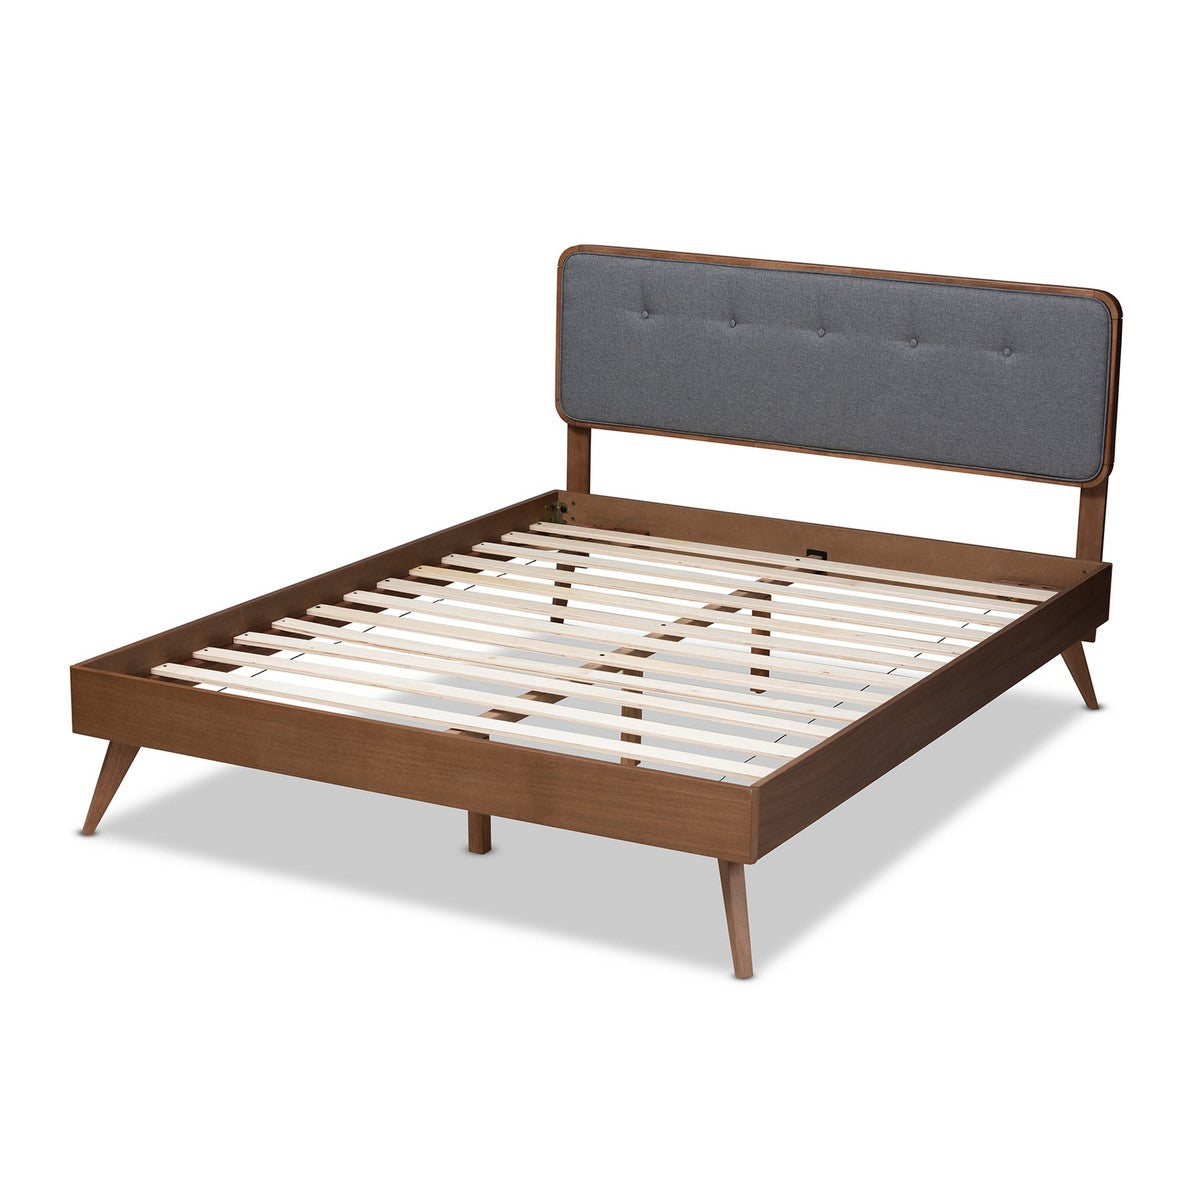 Baxton Studio Dilara Mid-Century Modern Dark Grey Fabric Upholstered Walnut Brown Finished Wood Full Size Platform Bed